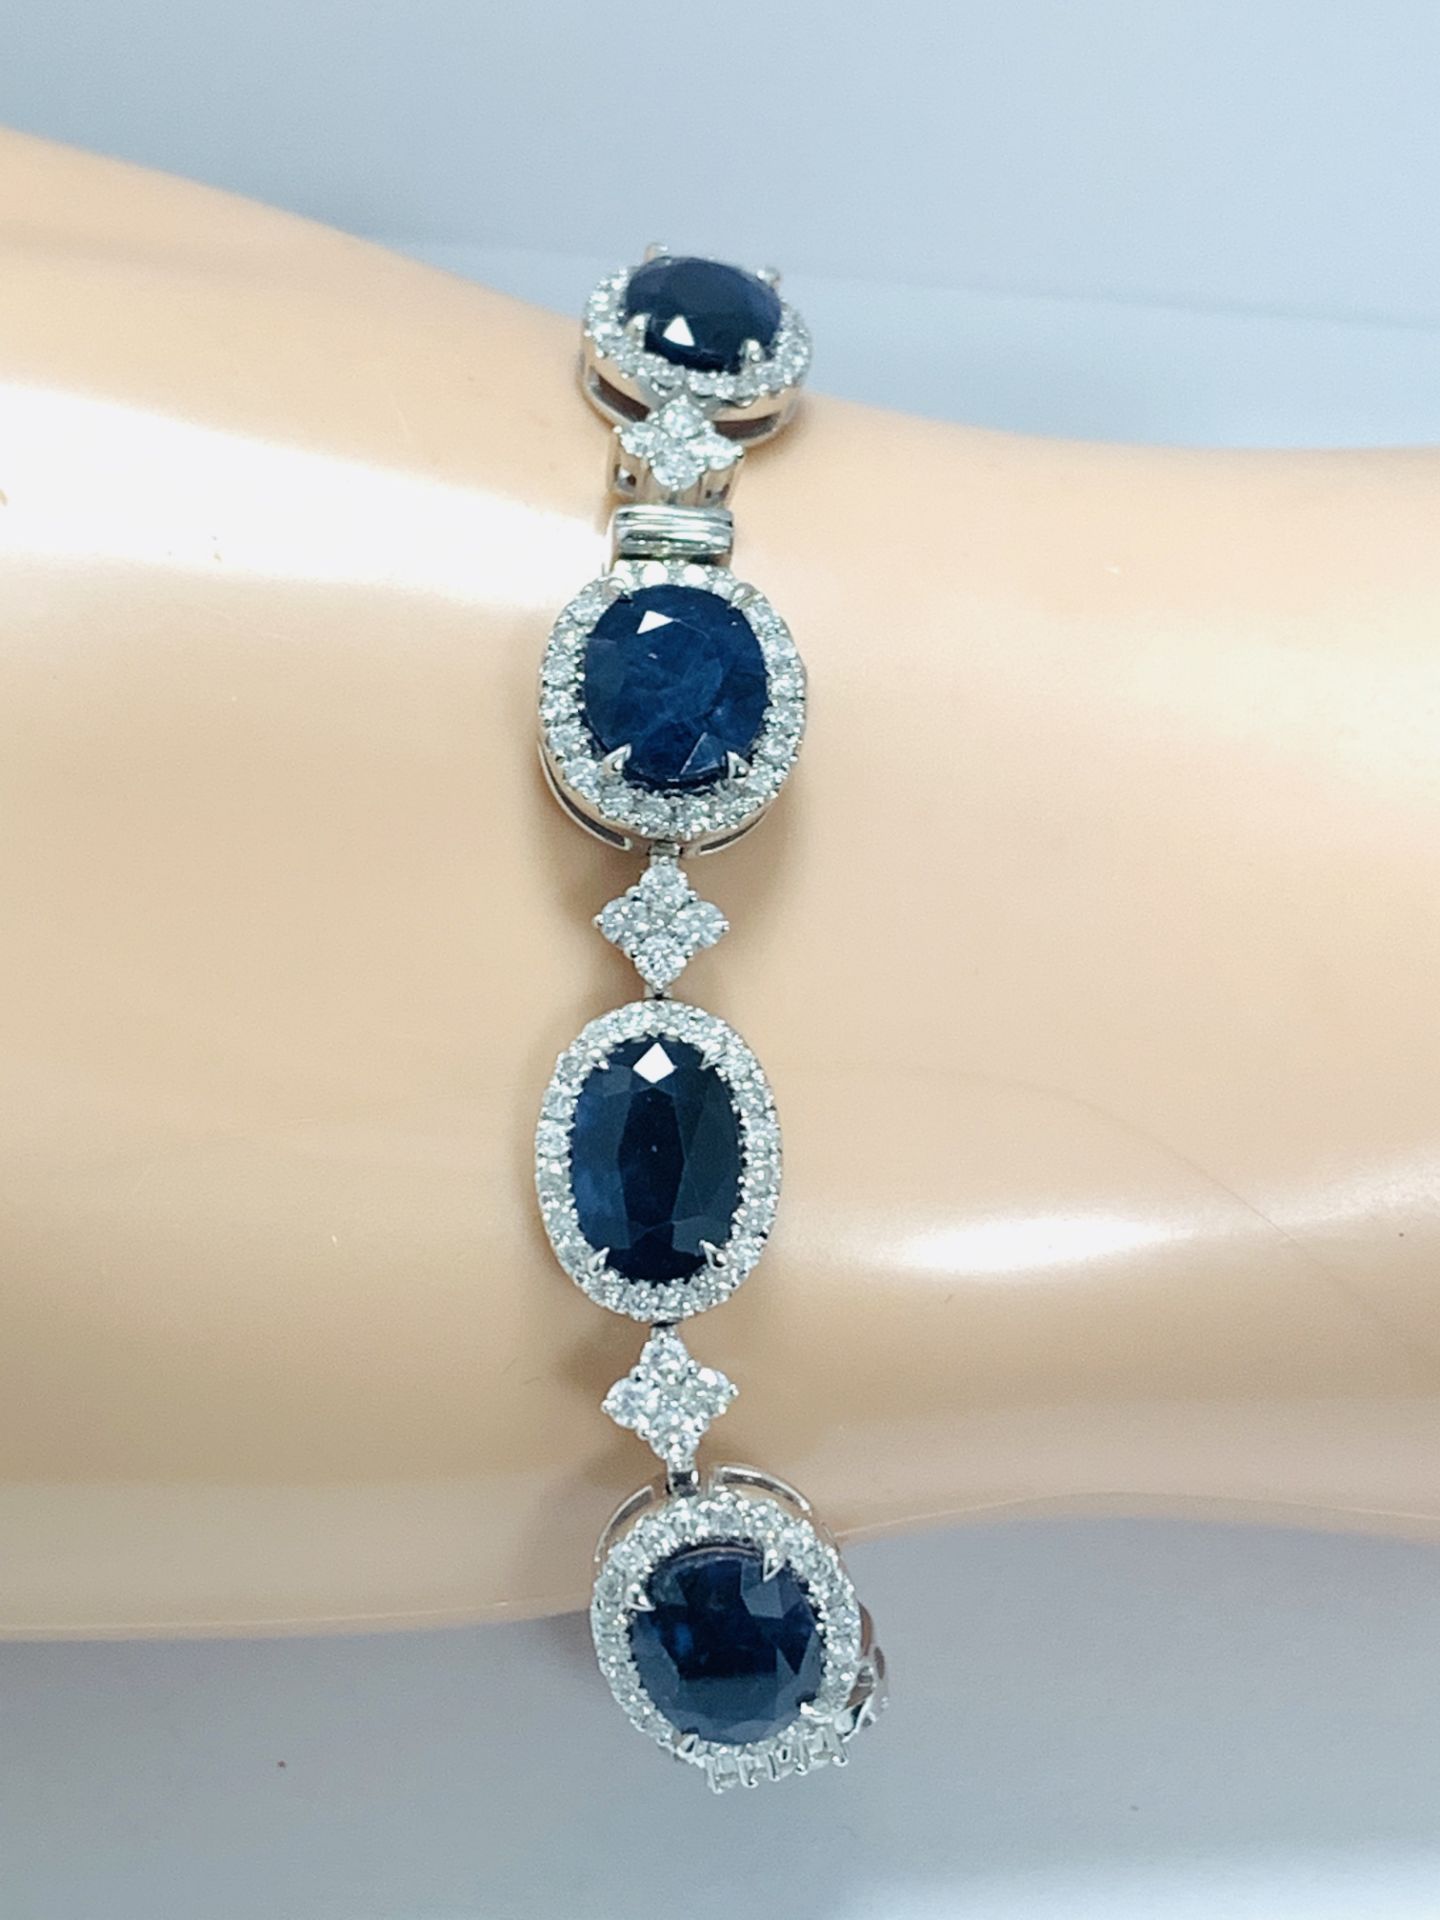 18ct White Gold Sapphire and Diamond Bracelet - Image 10 of 21